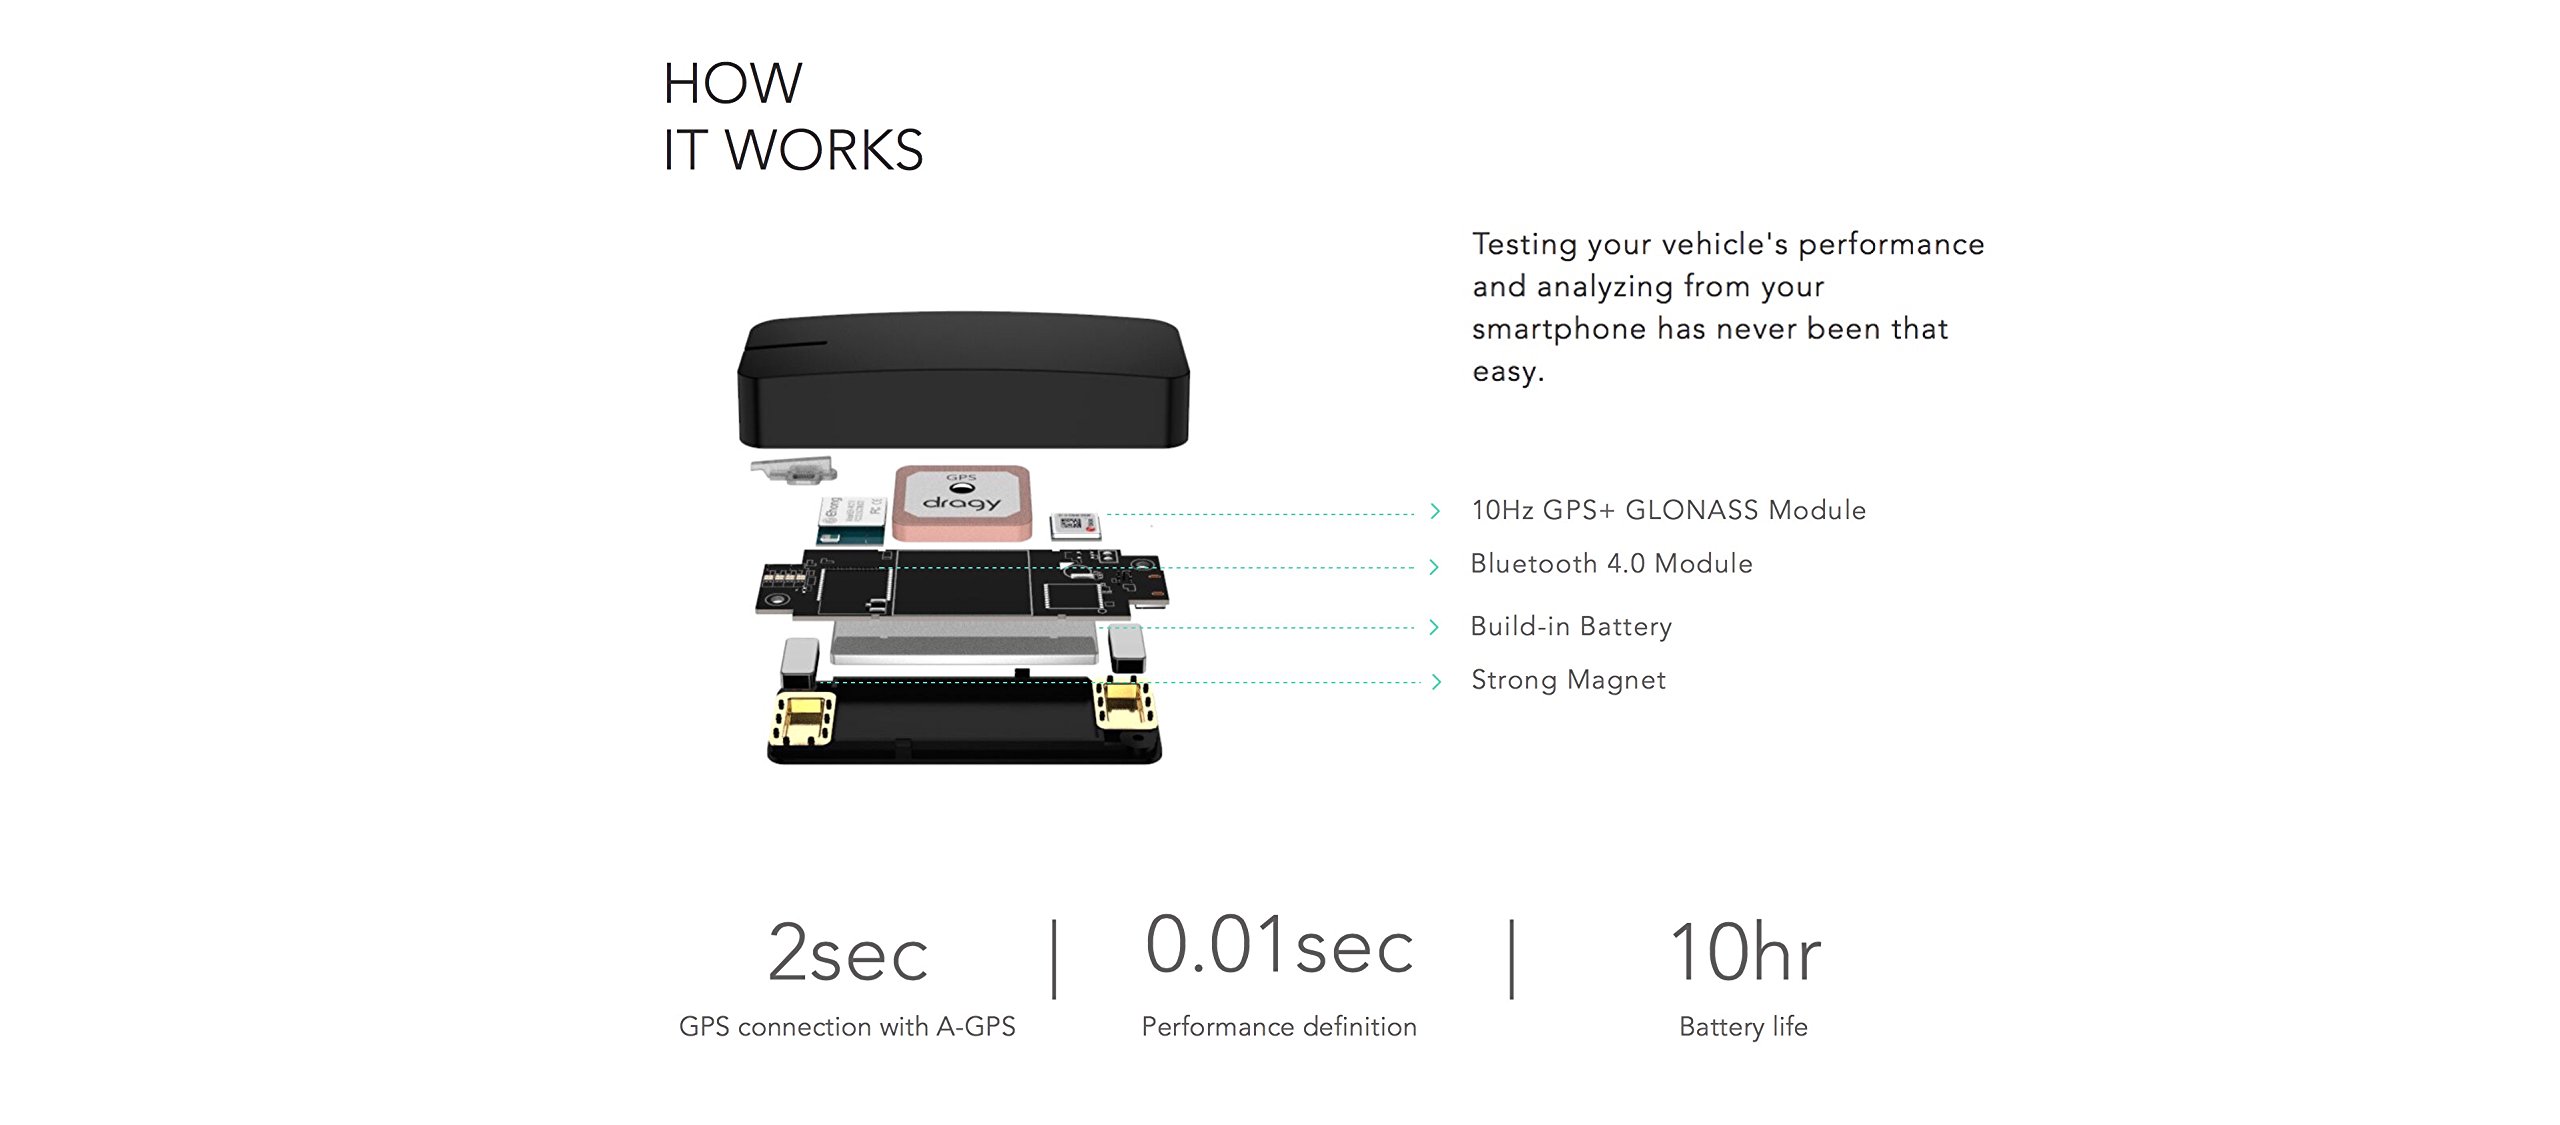 dragy 10Hz GPS Based Performance Meter, 10Hz GPS Laptimer (DRG69)